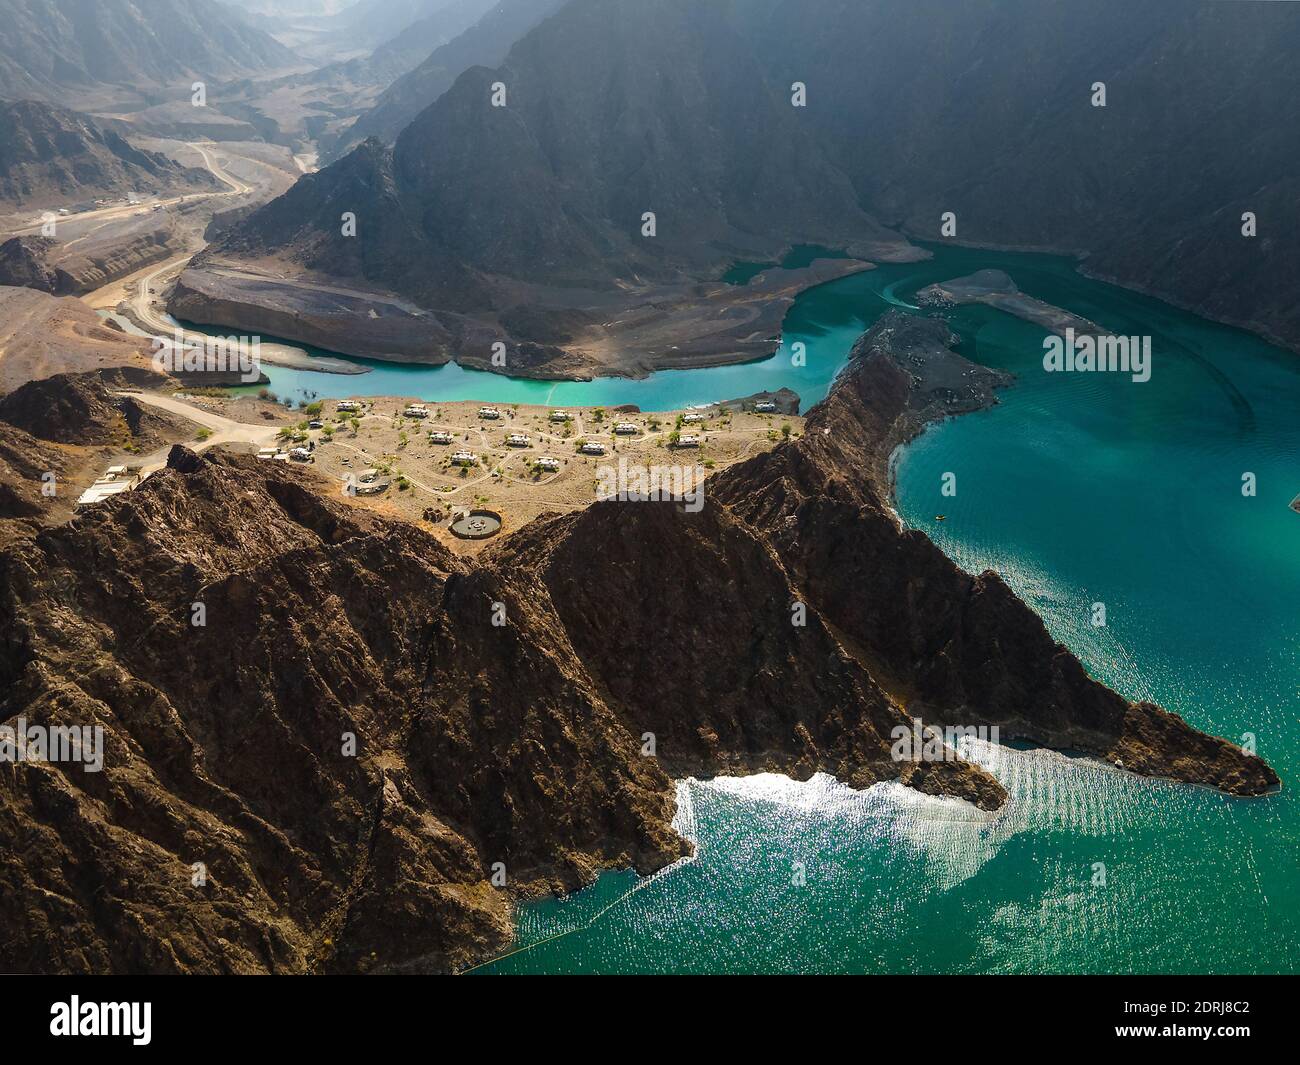 Hatta Dam Lake in mountains enclave region of Dubai, United Arab Emirates aerial view Stock Photo